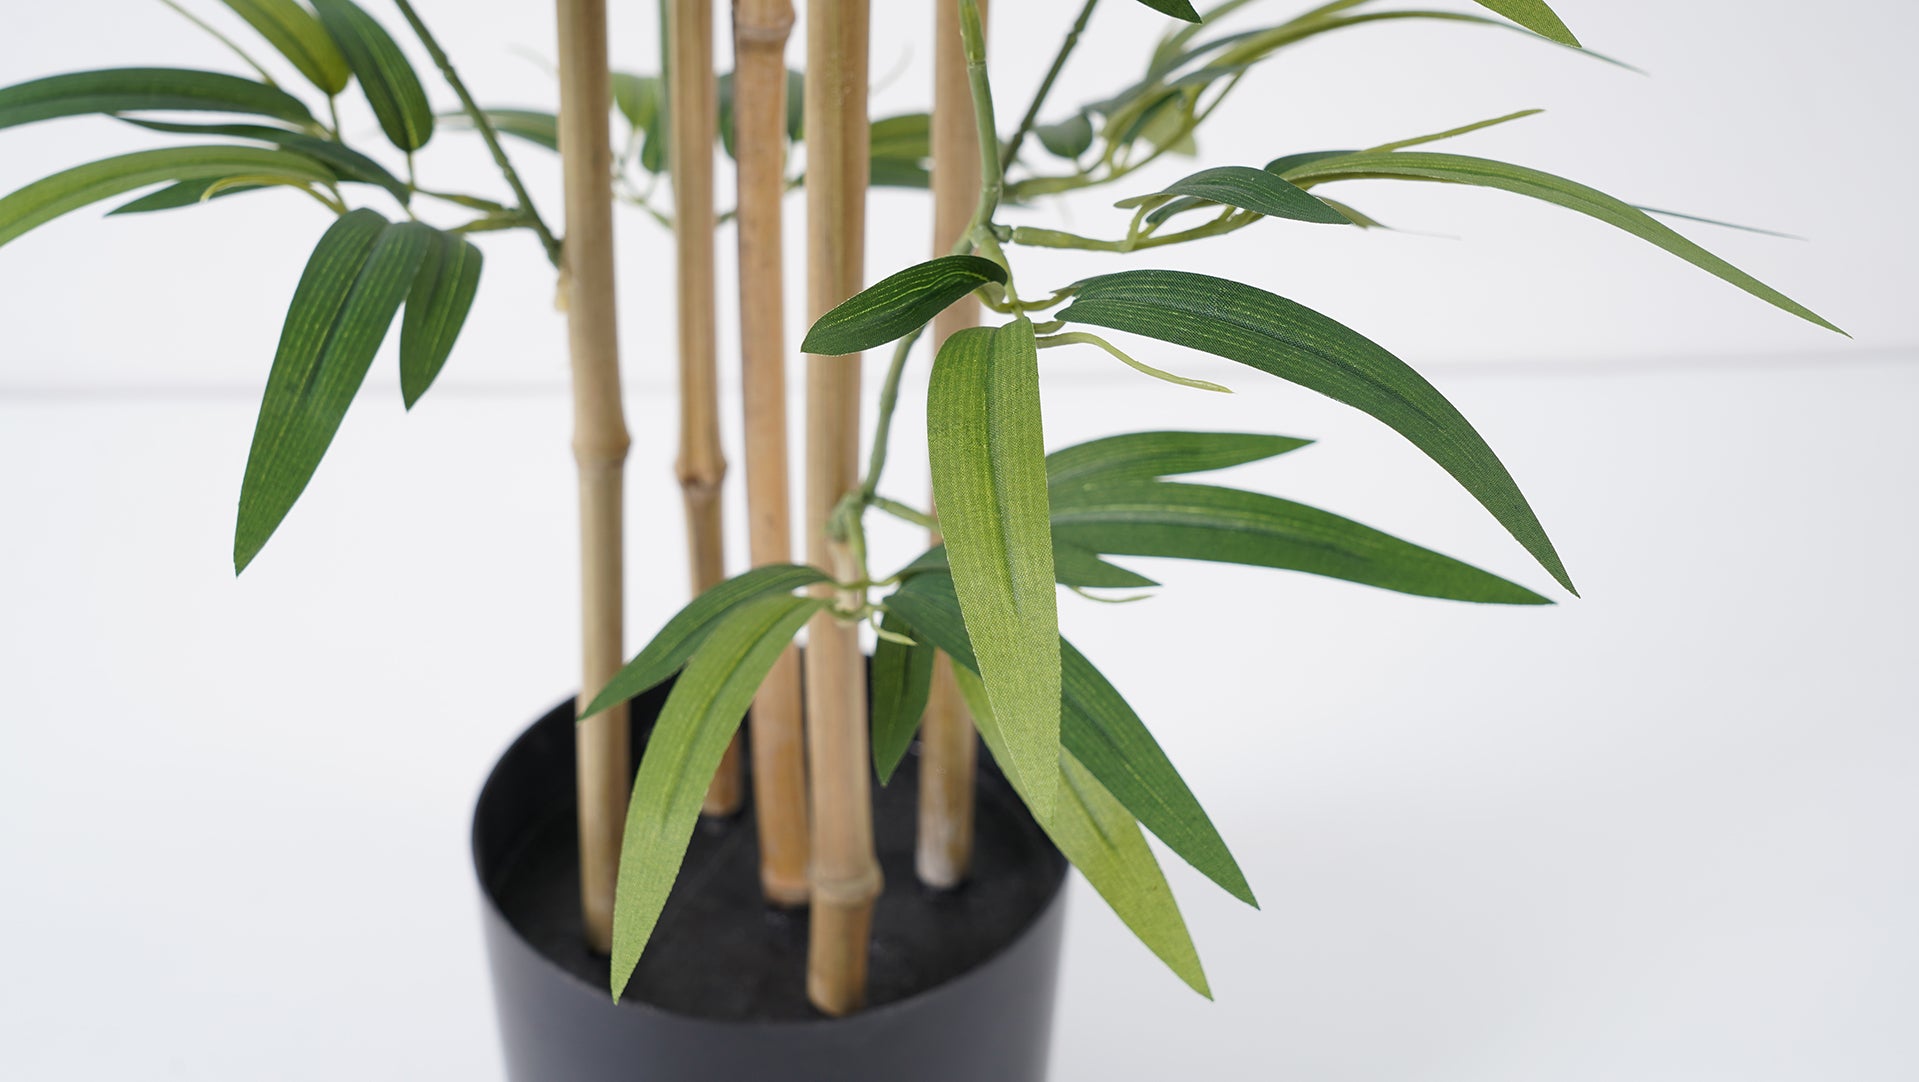 Bamboo (127 Cm)